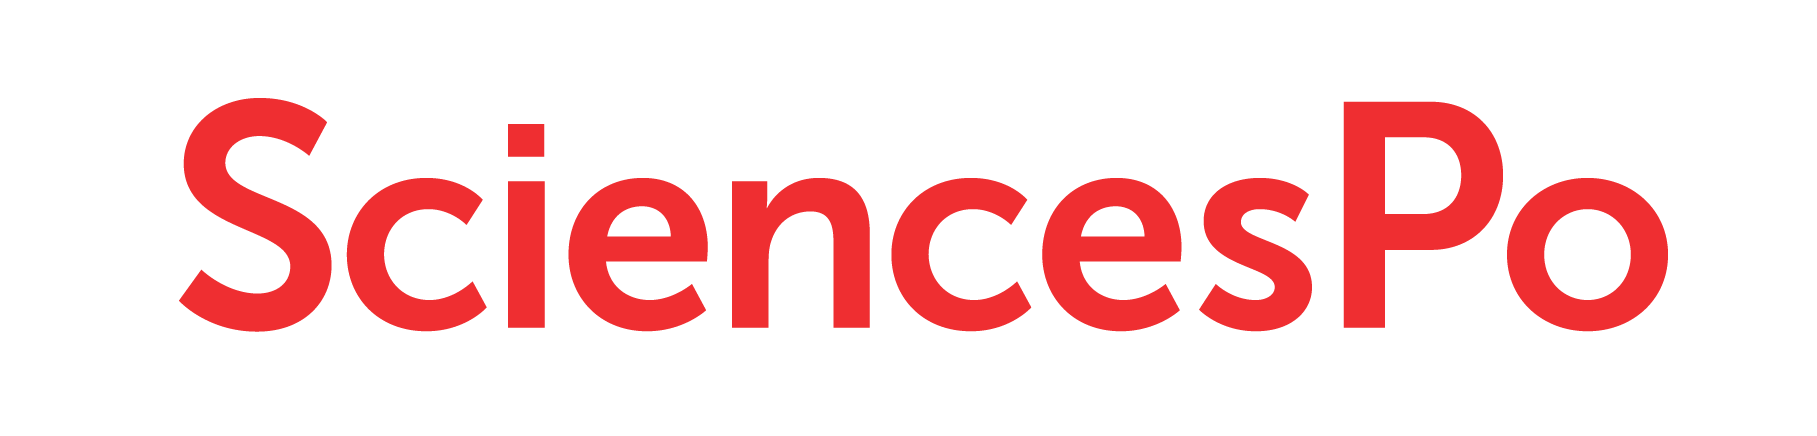 sciences po logo